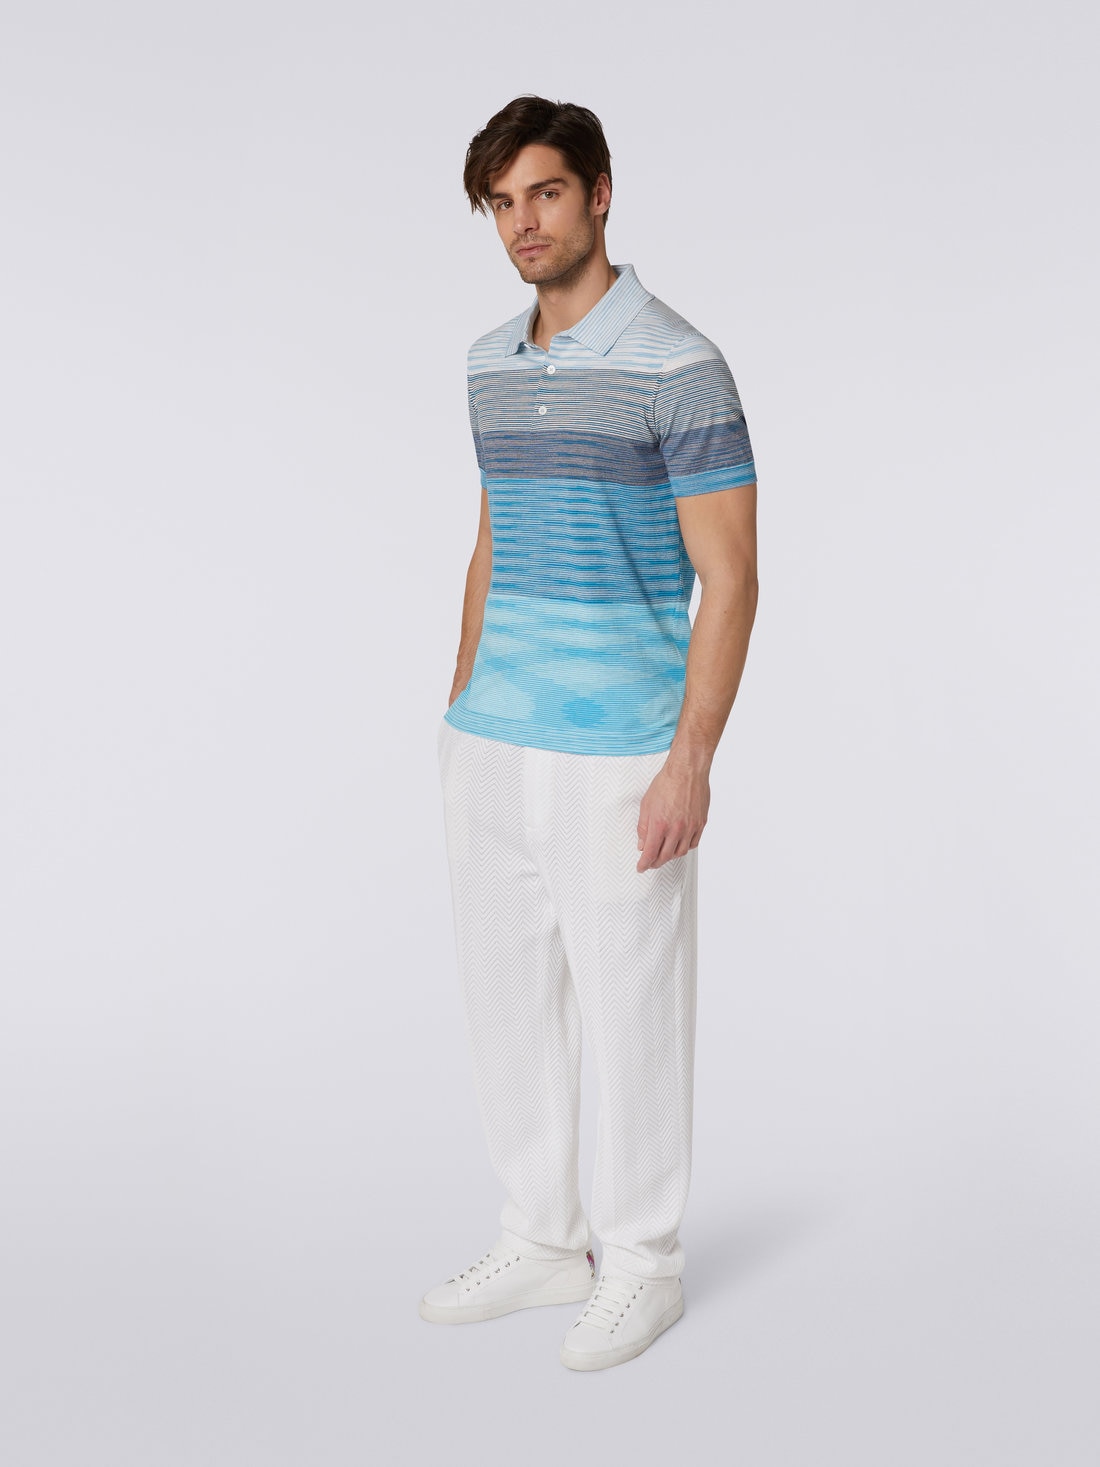 Dégradé striped cotton short-sleeved polo shirt, White & Light Blue - US23S20PBK012QS7294 - 2